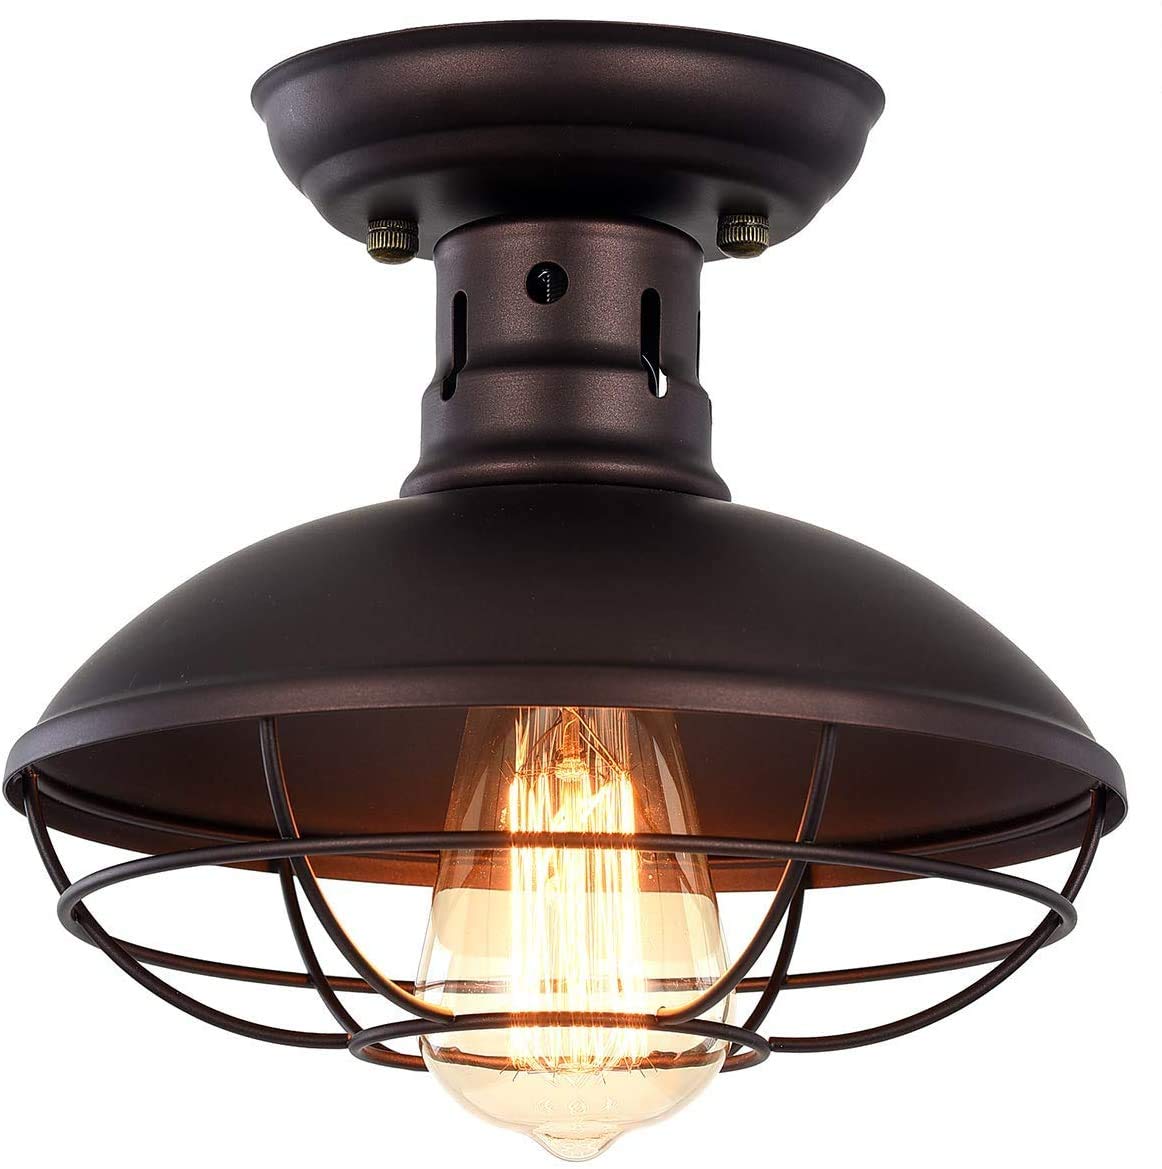 OUKANING Vintage Deckenleuchte Schwarz Metal Ceiling Light E27 Semi Flush Mount Ceiling Light Vintage 8,7 inch Deckenlampen Industrielampe Lampe